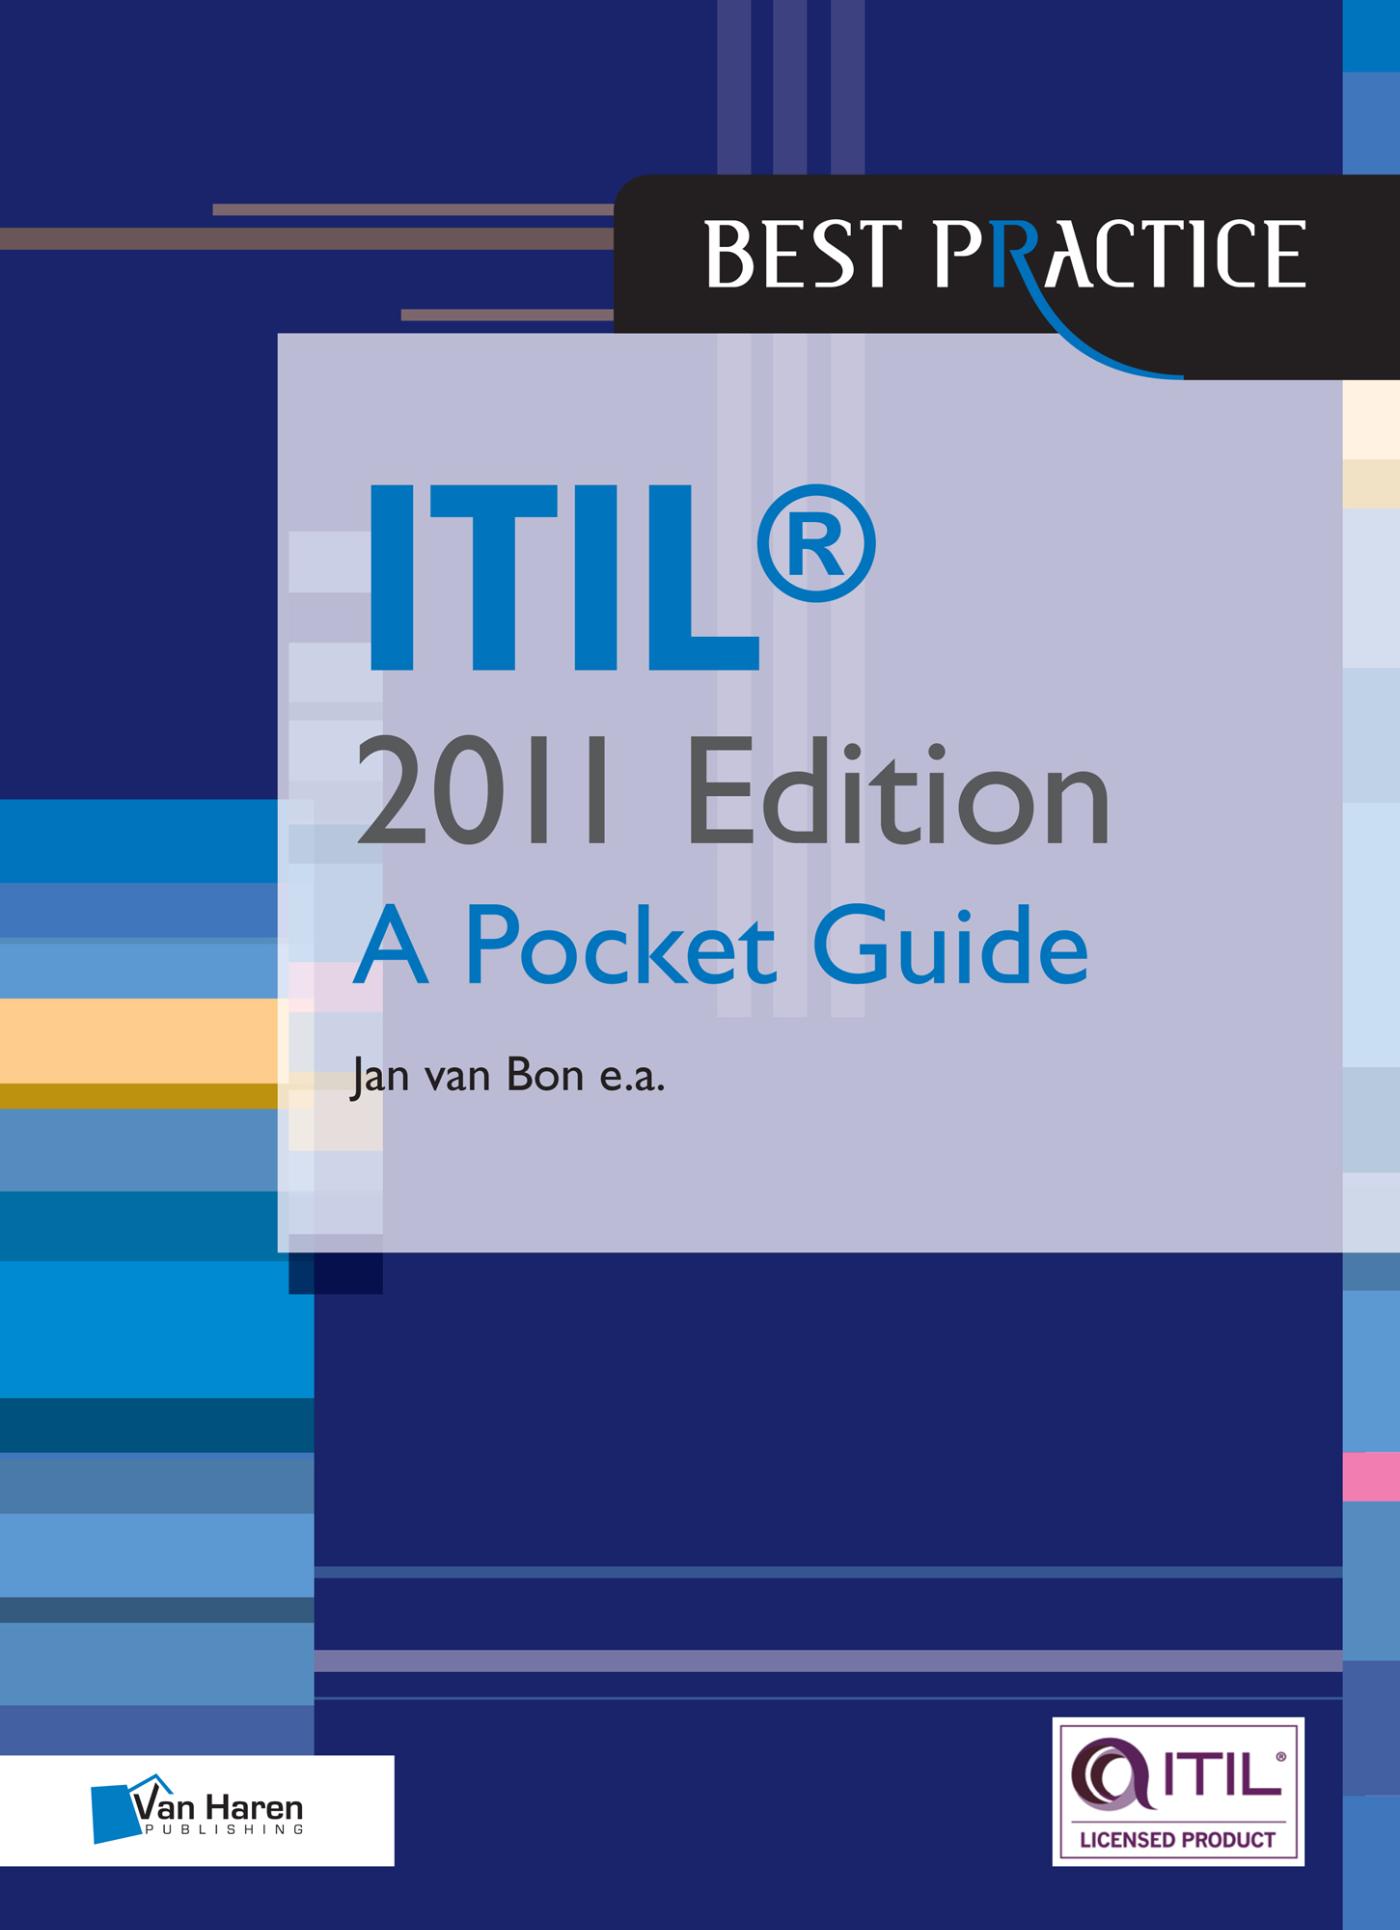 ITIL a pocket edition / 2011